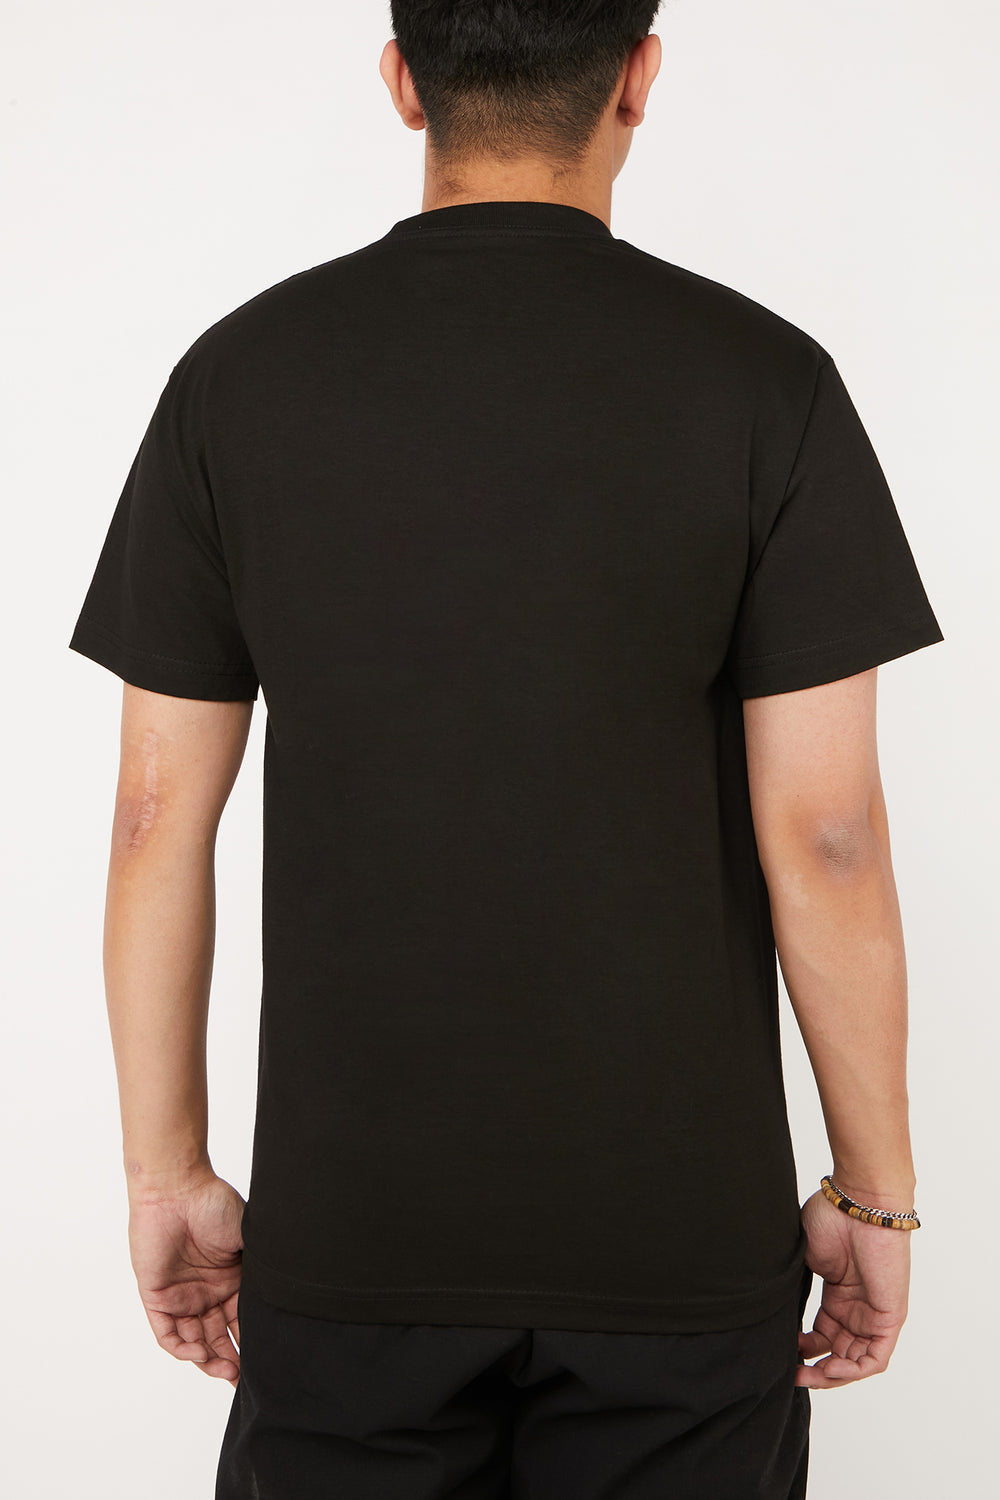 40s & Shorties Curious T-Shirt Black